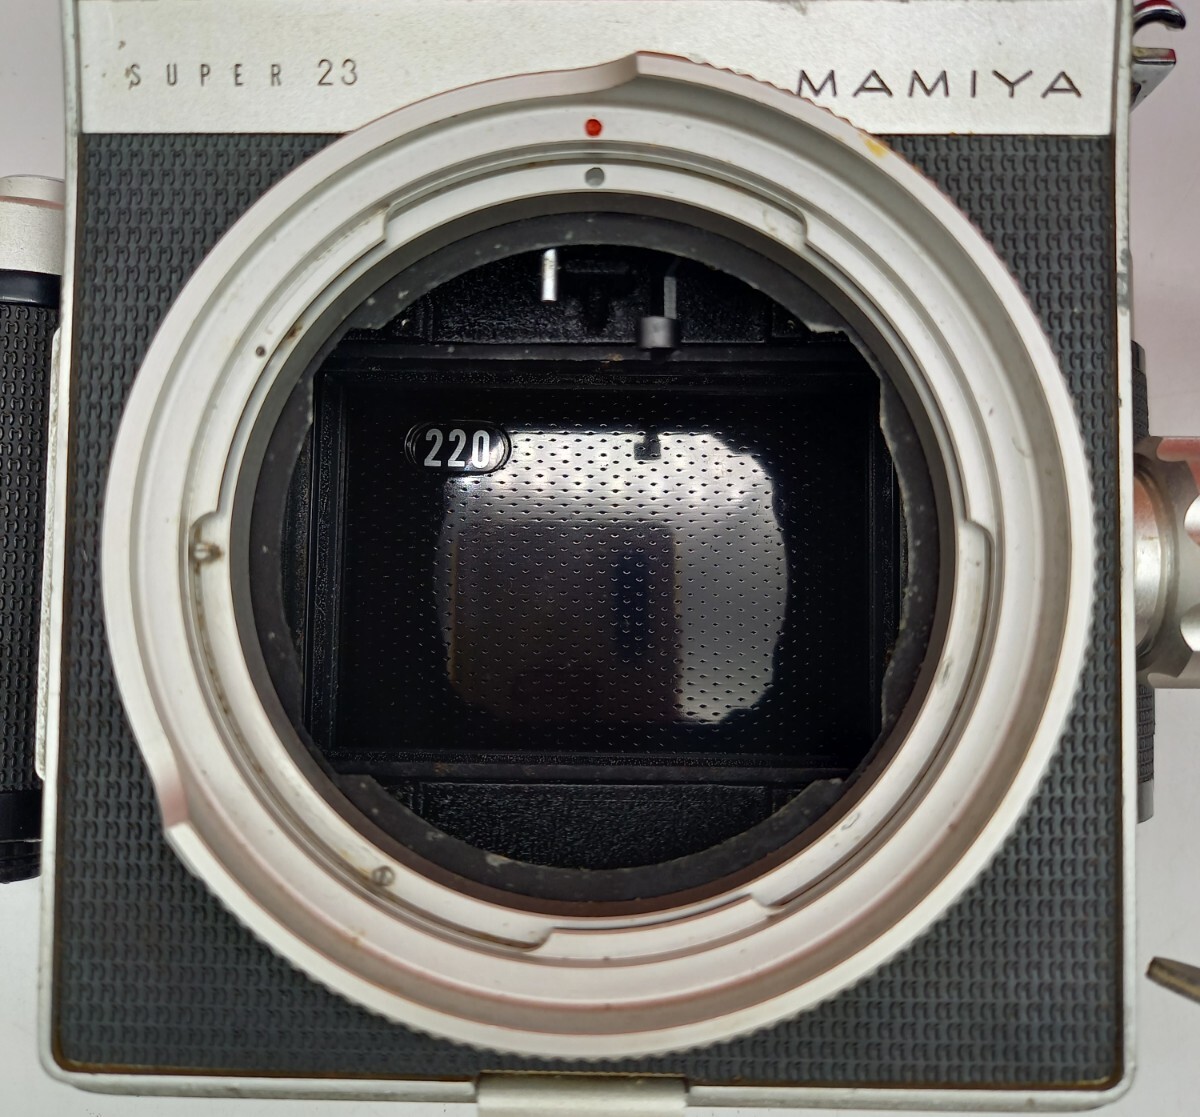 # MAMIYA SUPER 23 body SEKOR 100mm F3.5 lens medium size camera shutter OK Mamiya 